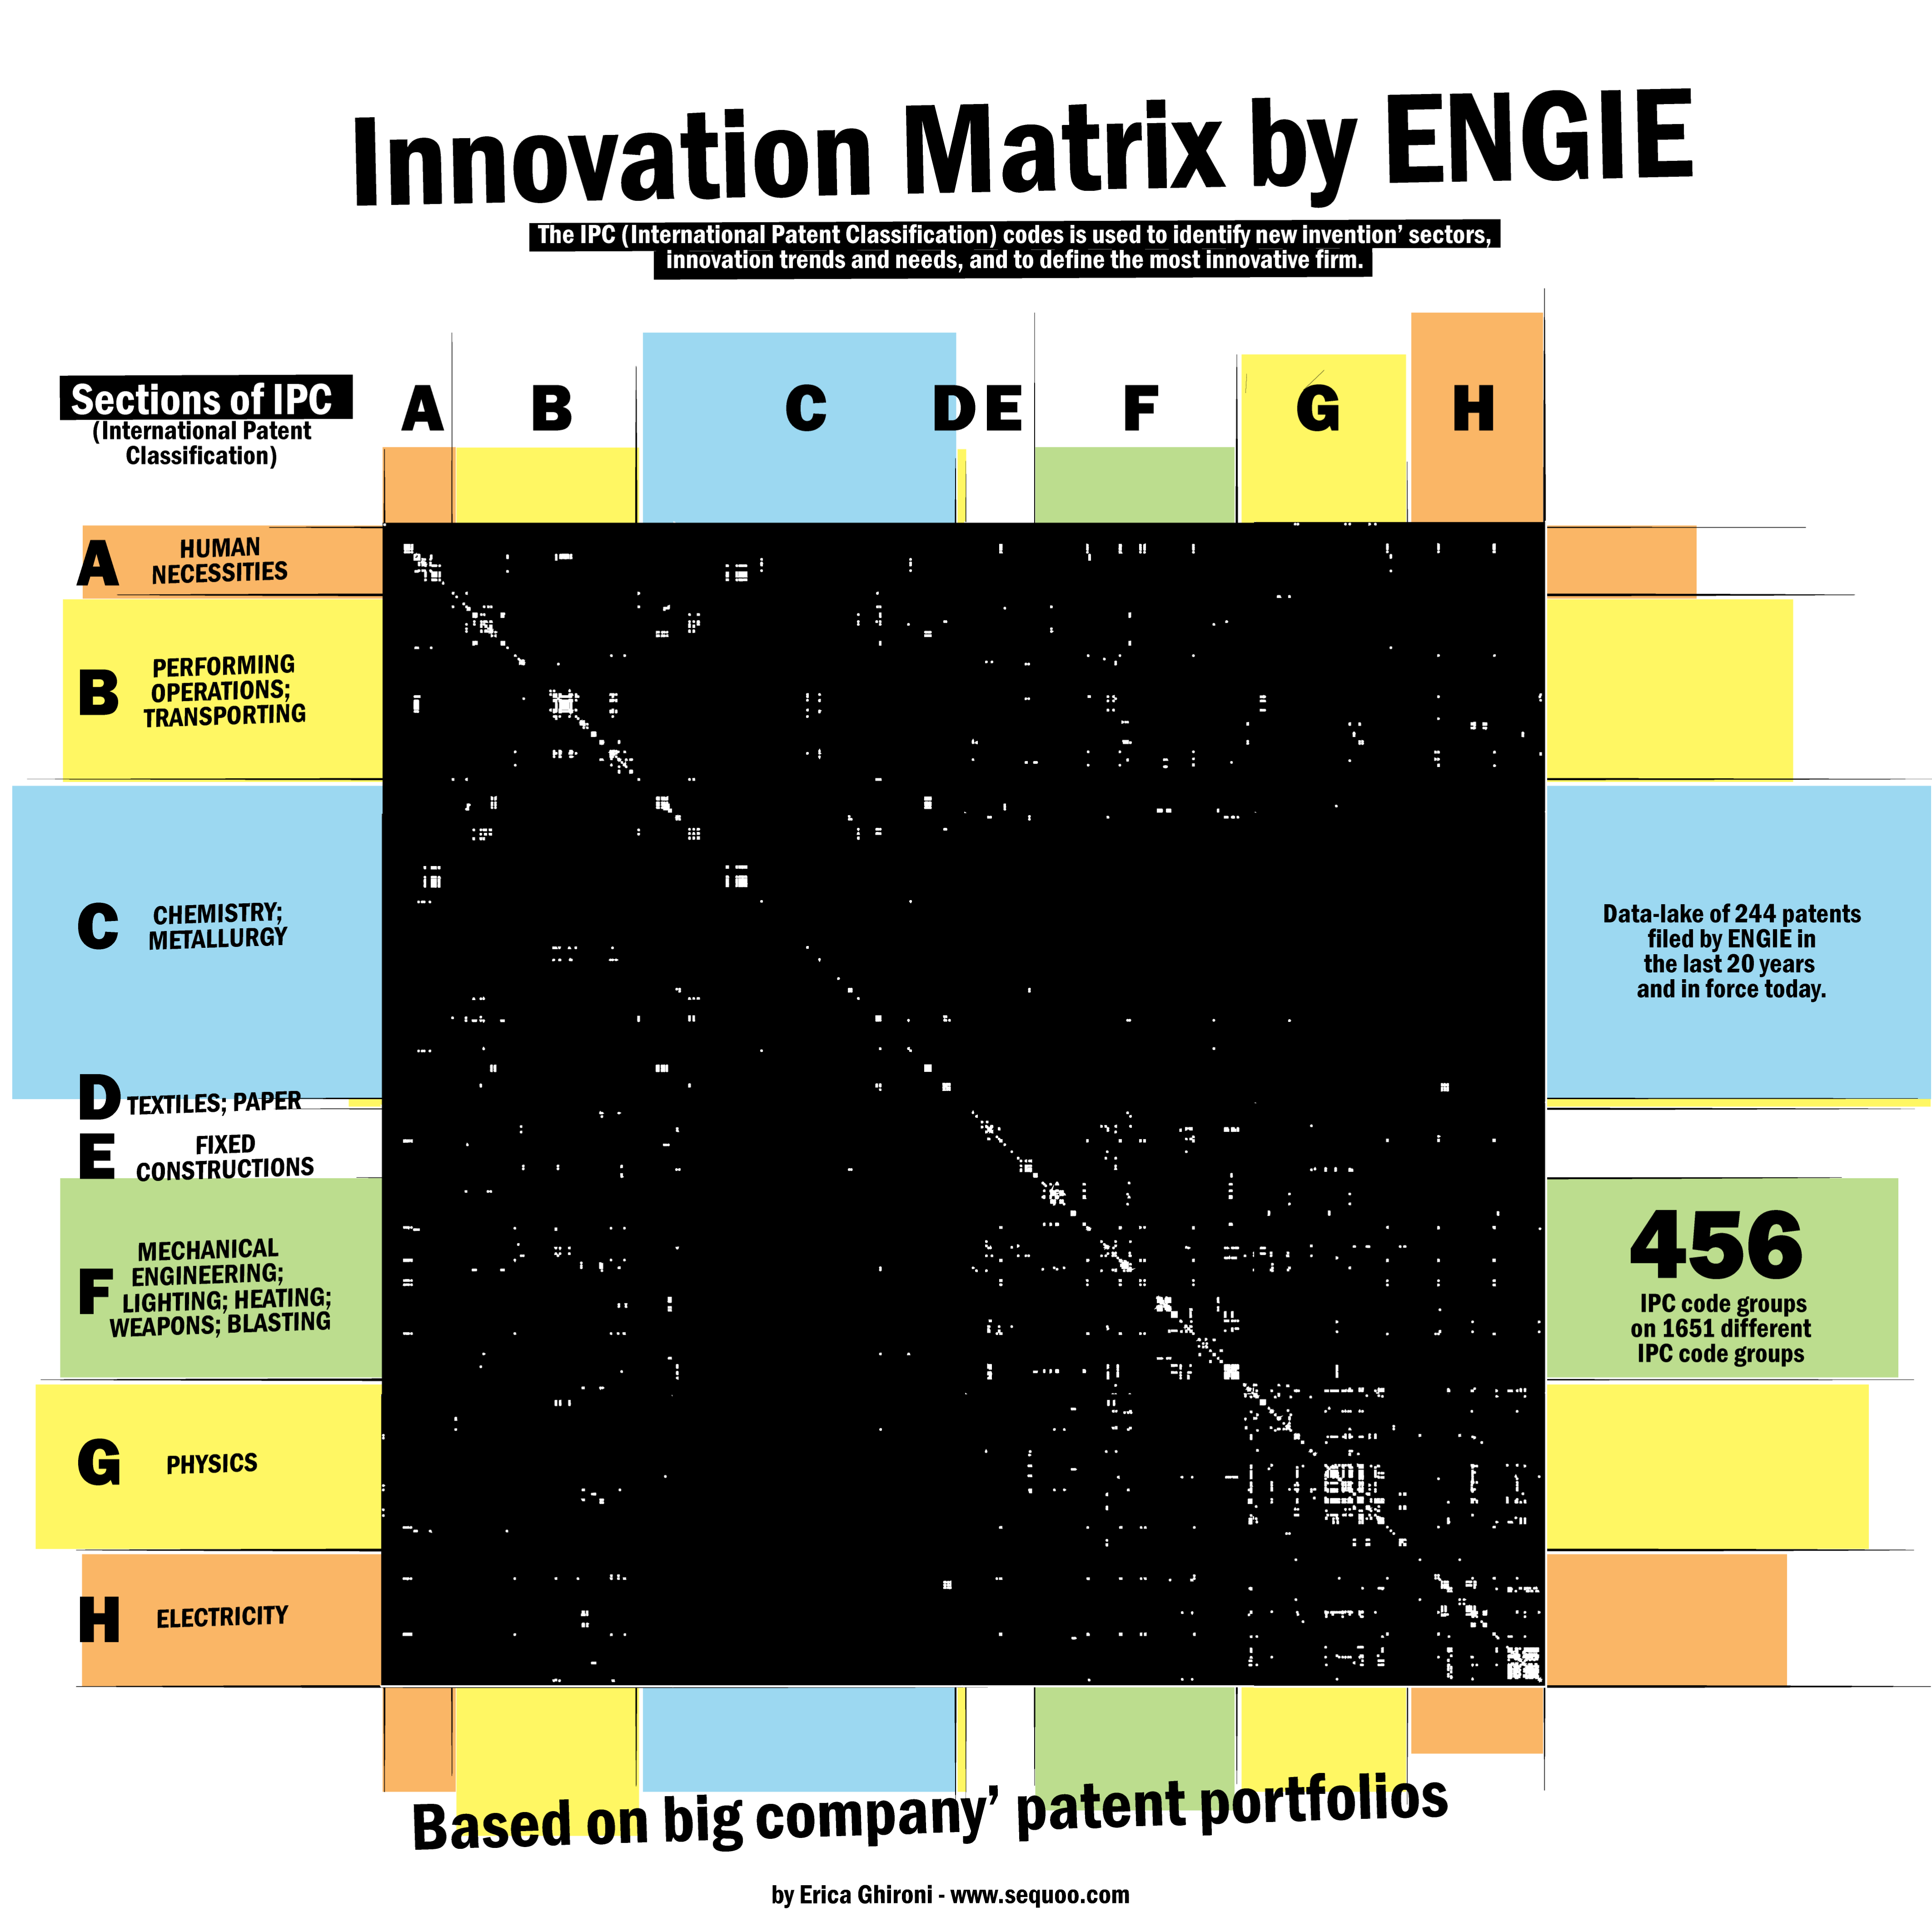 patent portfolio by ENGIE